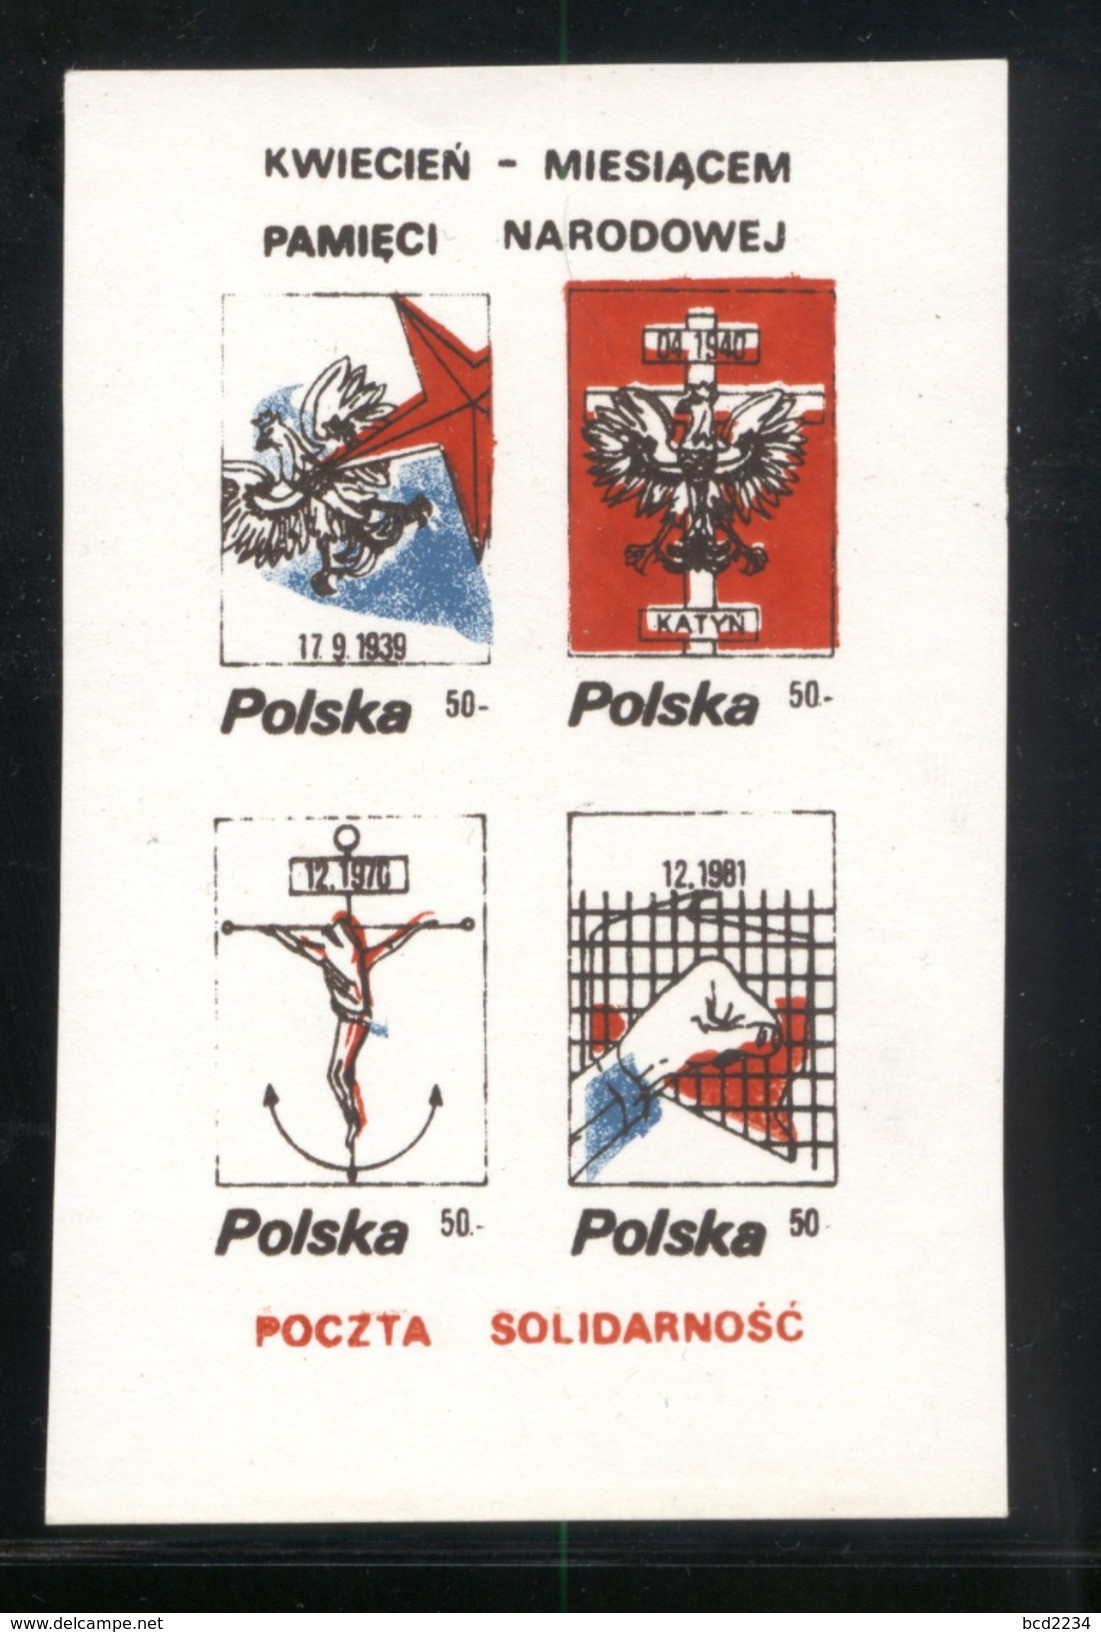 POLAND SOLIDARNOSC SOLIDARITY (POCZTA SOLIDARNOSC) APRIL NATIONAL MONTH OF REMEMBRANCE MS KATYN WW2 WORLD WAR 2 - Vignette Solidarnosc